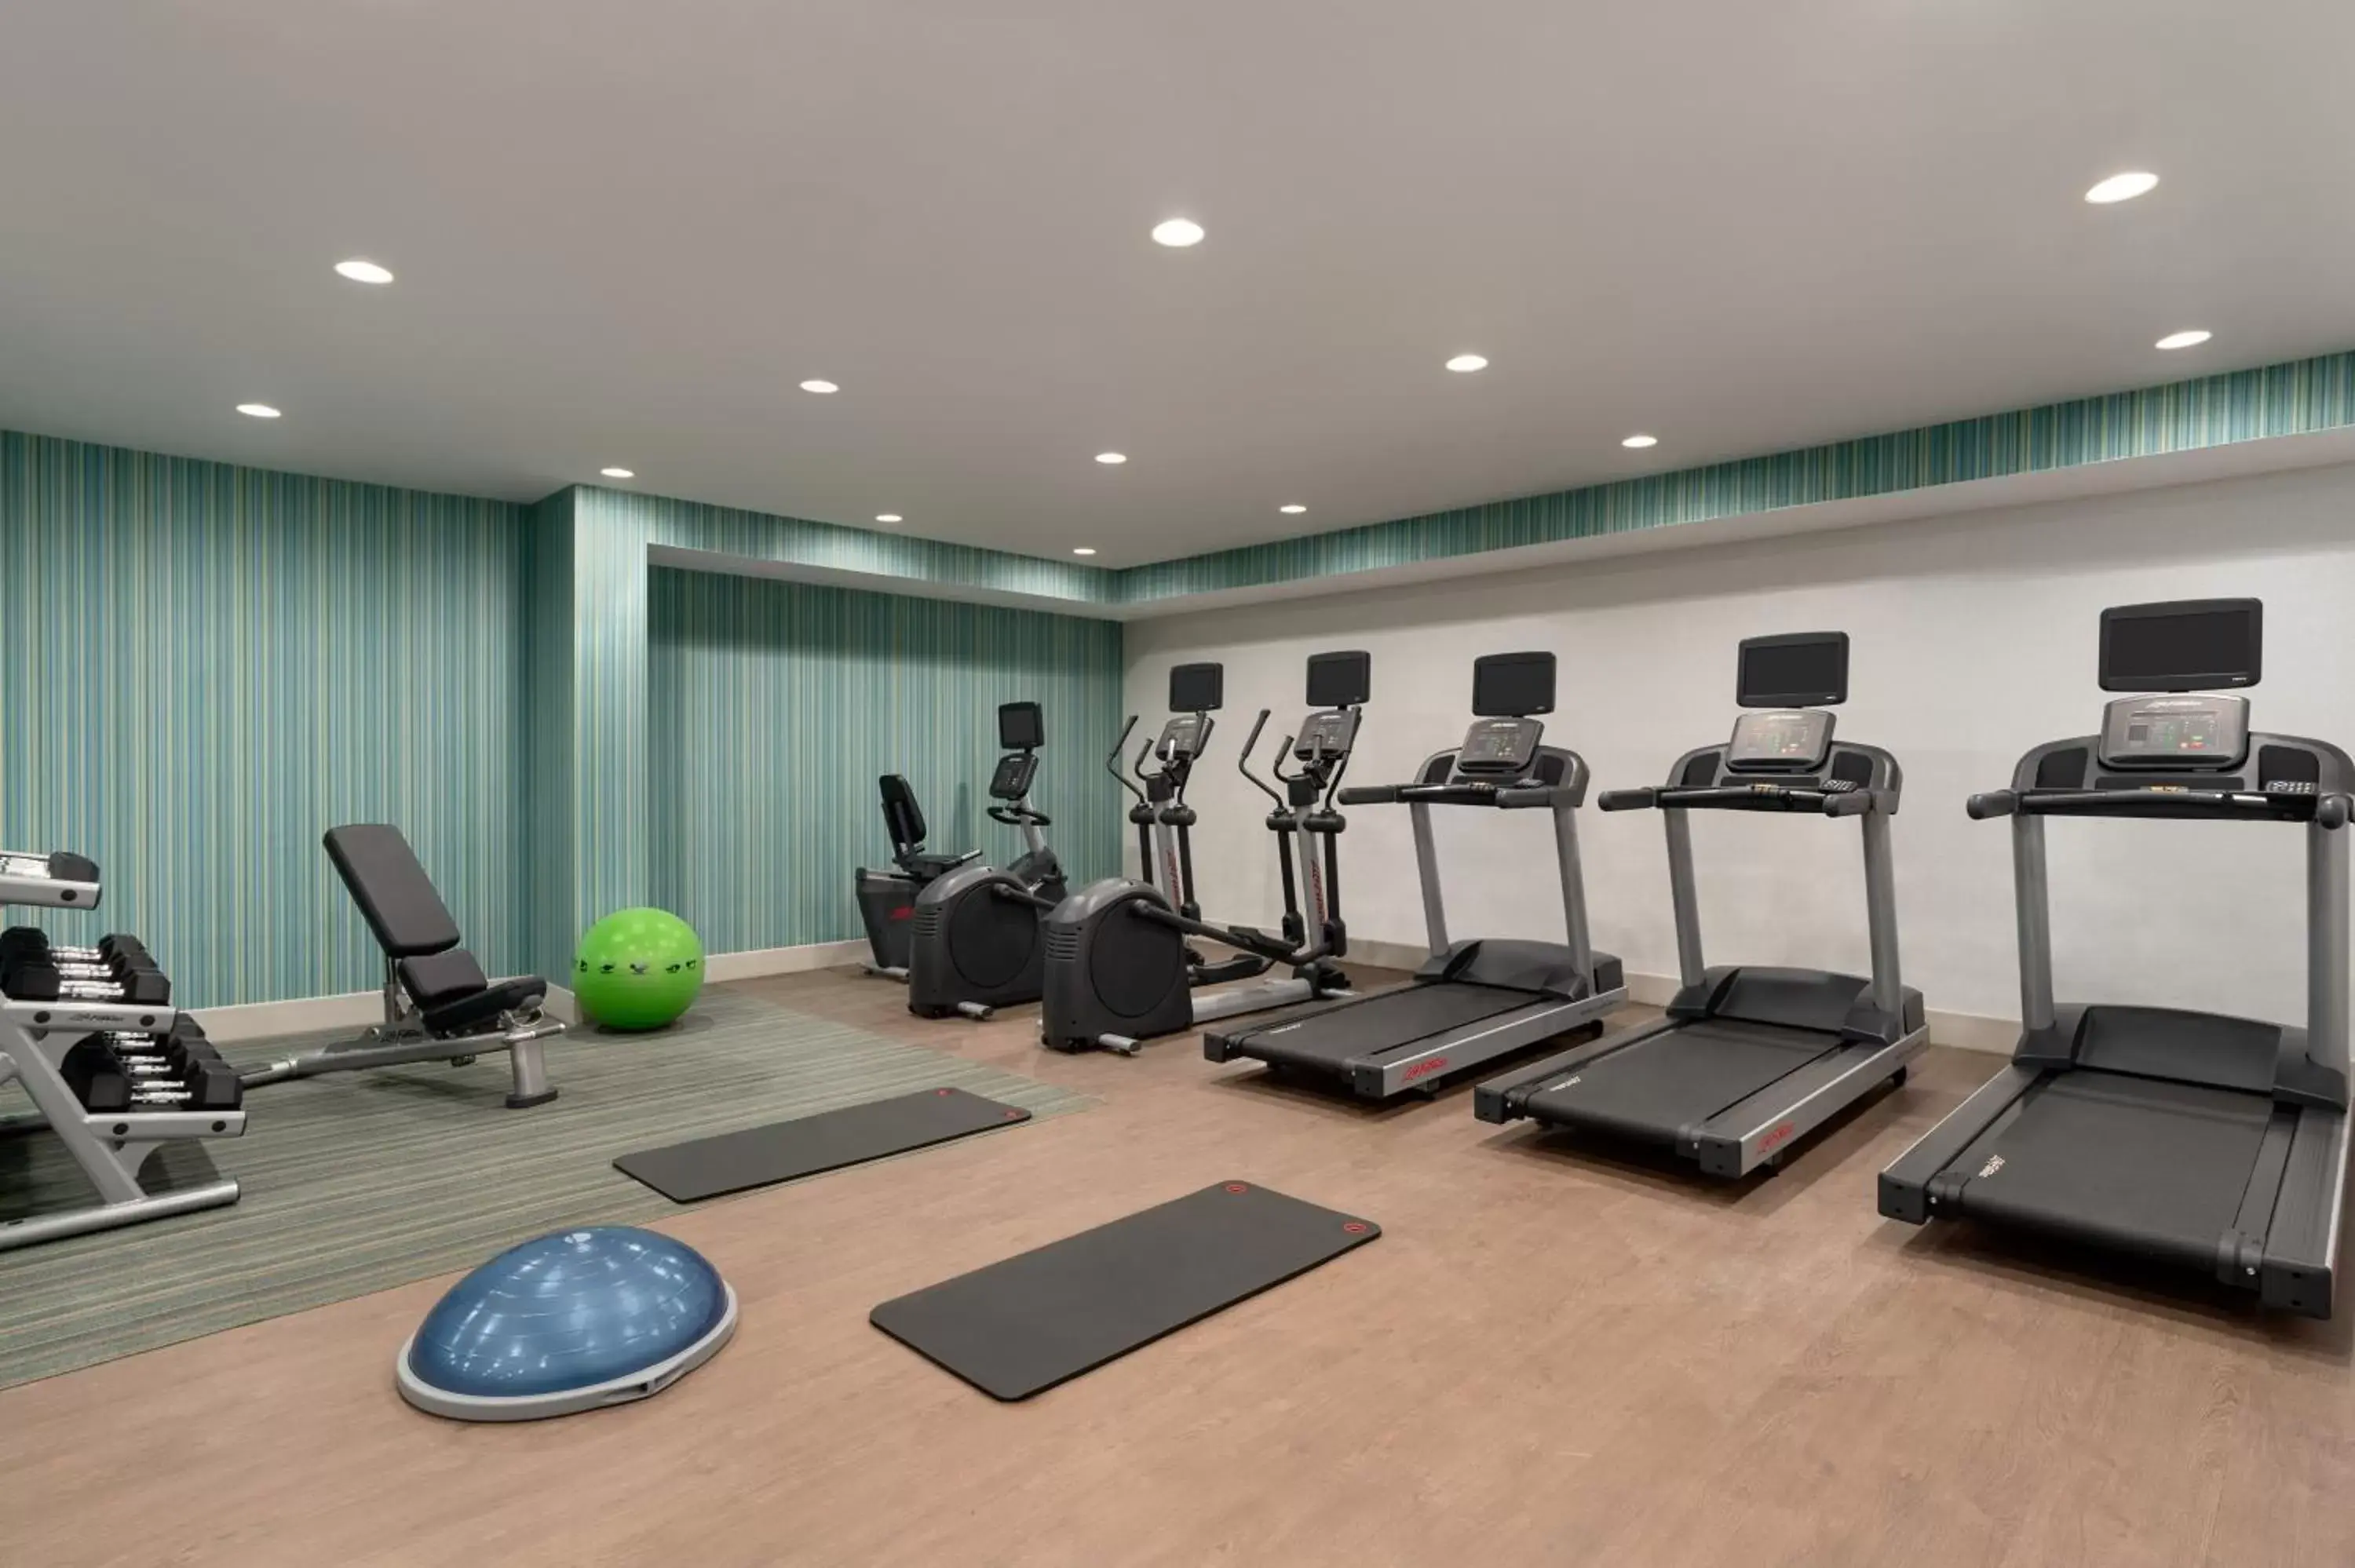 Fitness centre/facilities, Fitness Center/Facilities in Holiday Inn Express - Jamaica - JFK AirTrain - NYC, an IHG Hotel